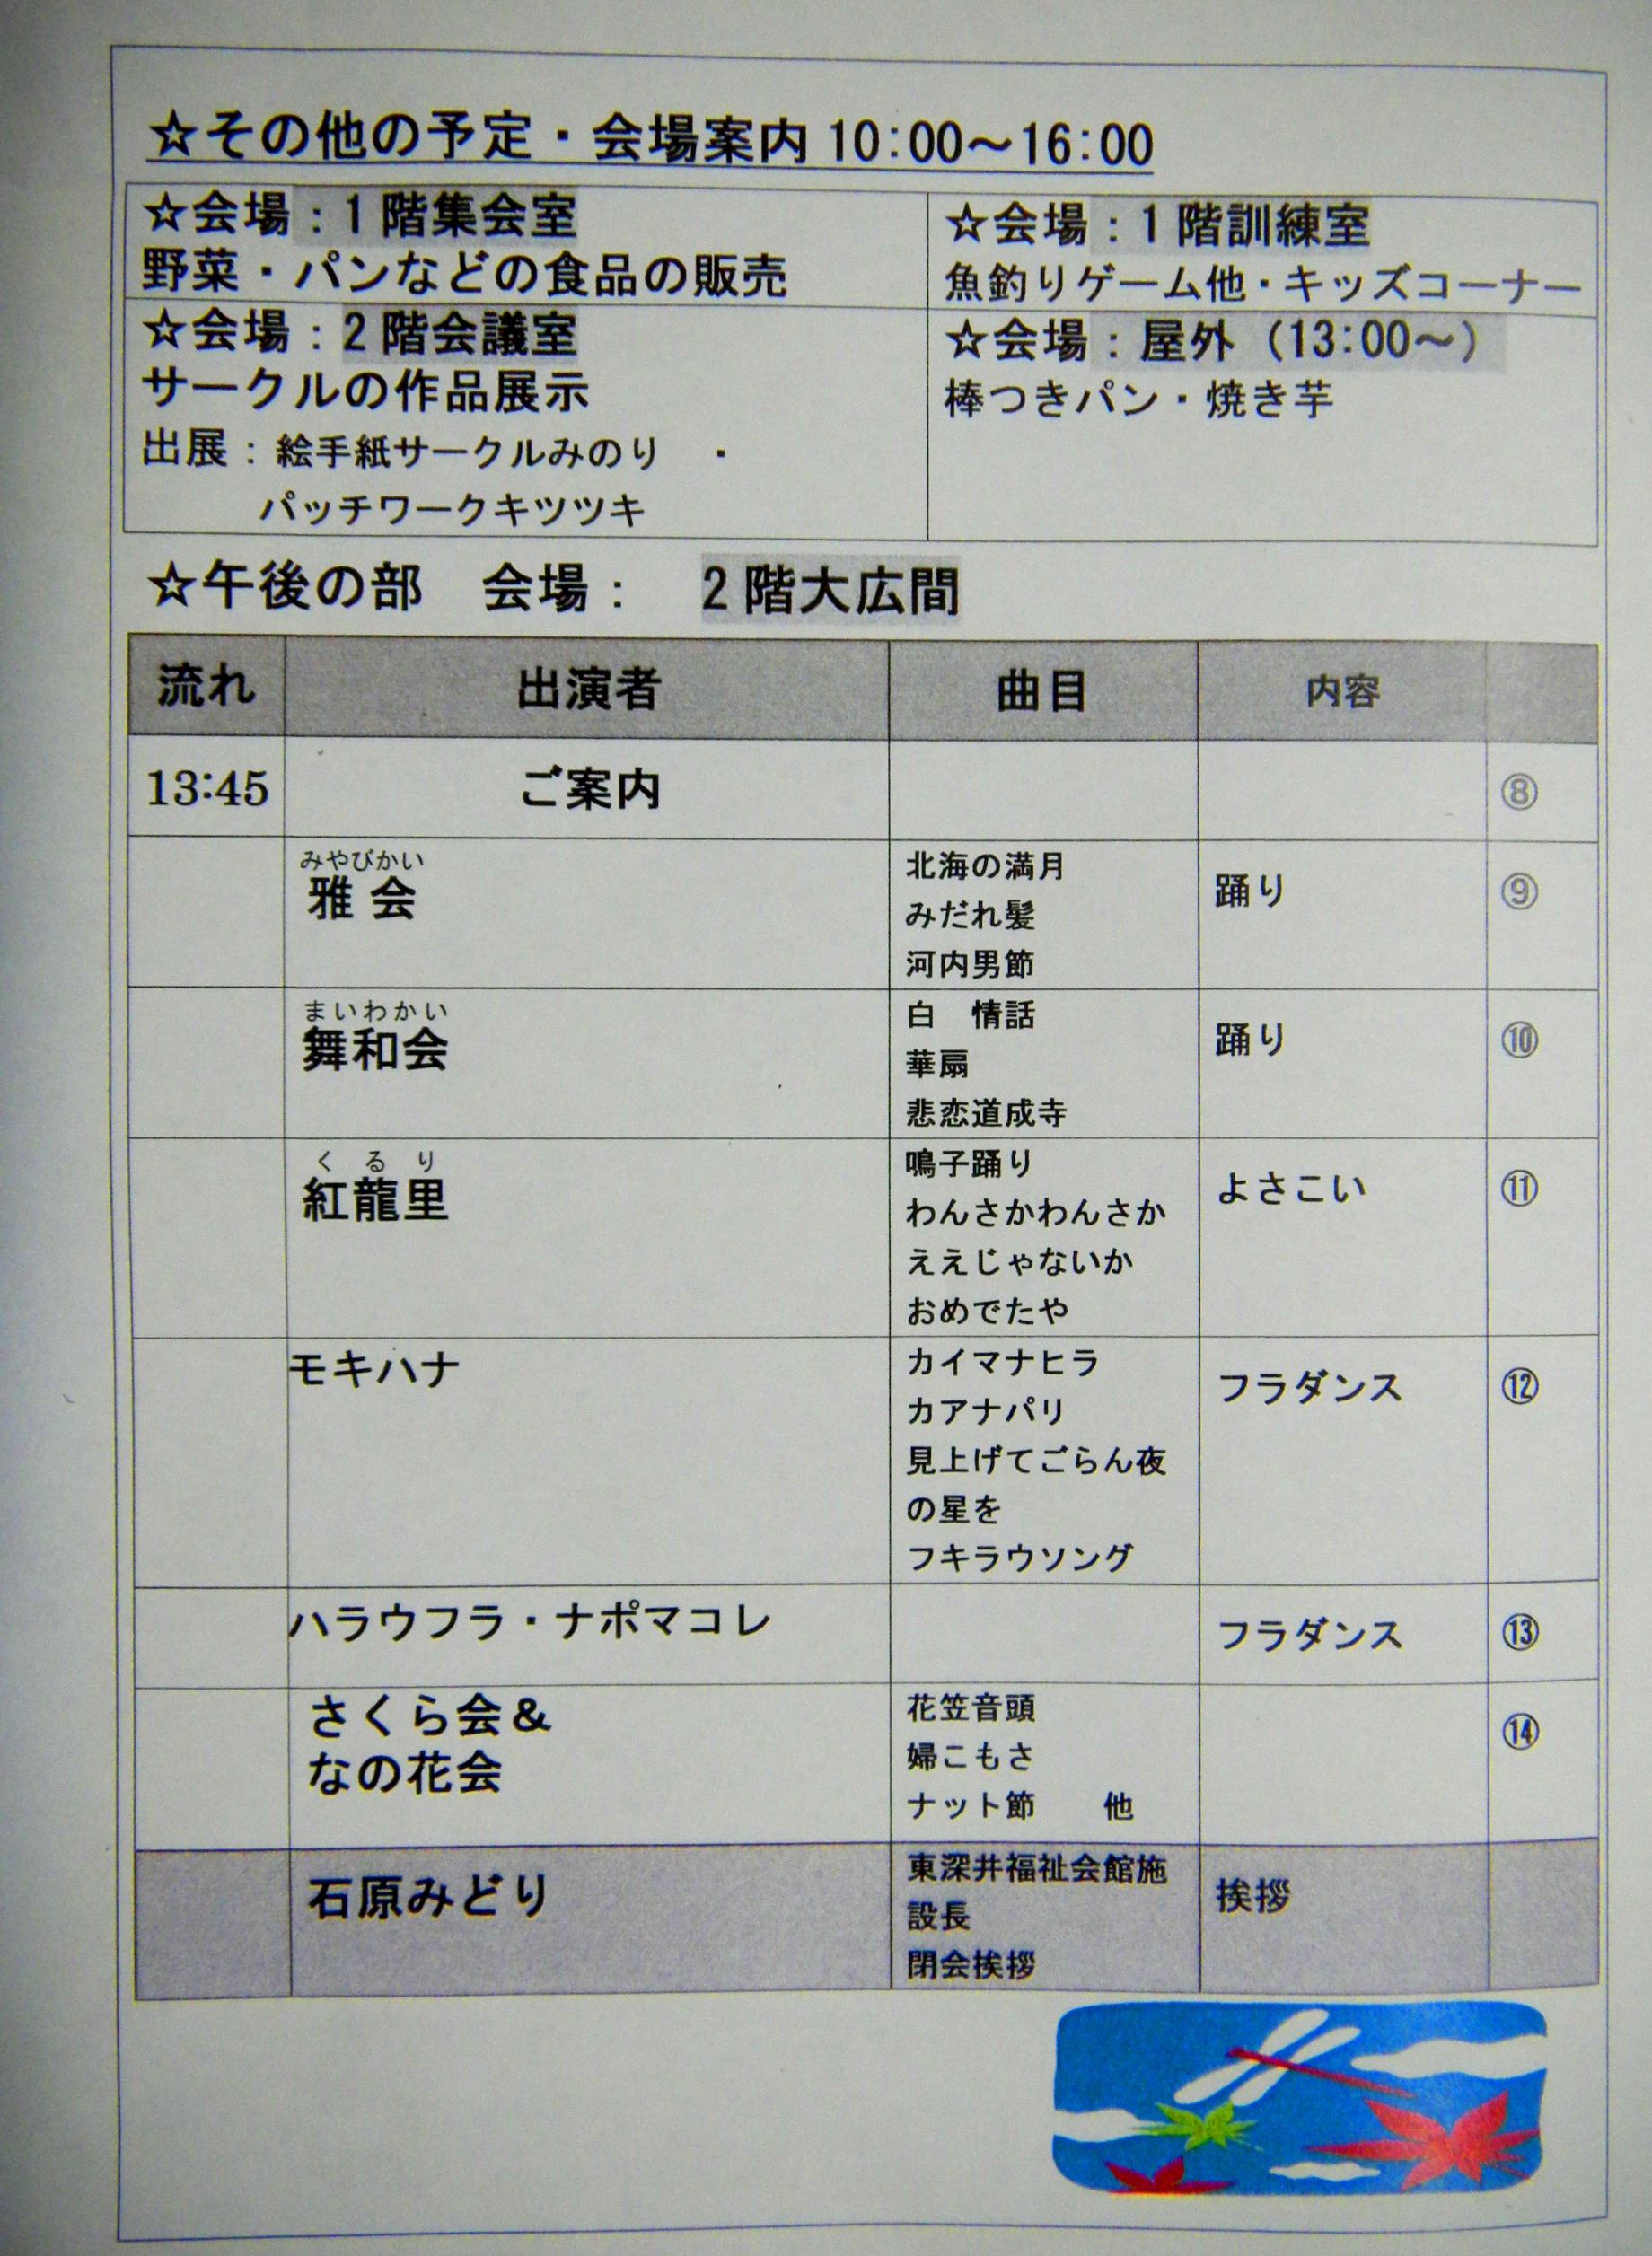 http://www.higashifukai-wh.org/news/2012/10/04/PM/PM.jpg